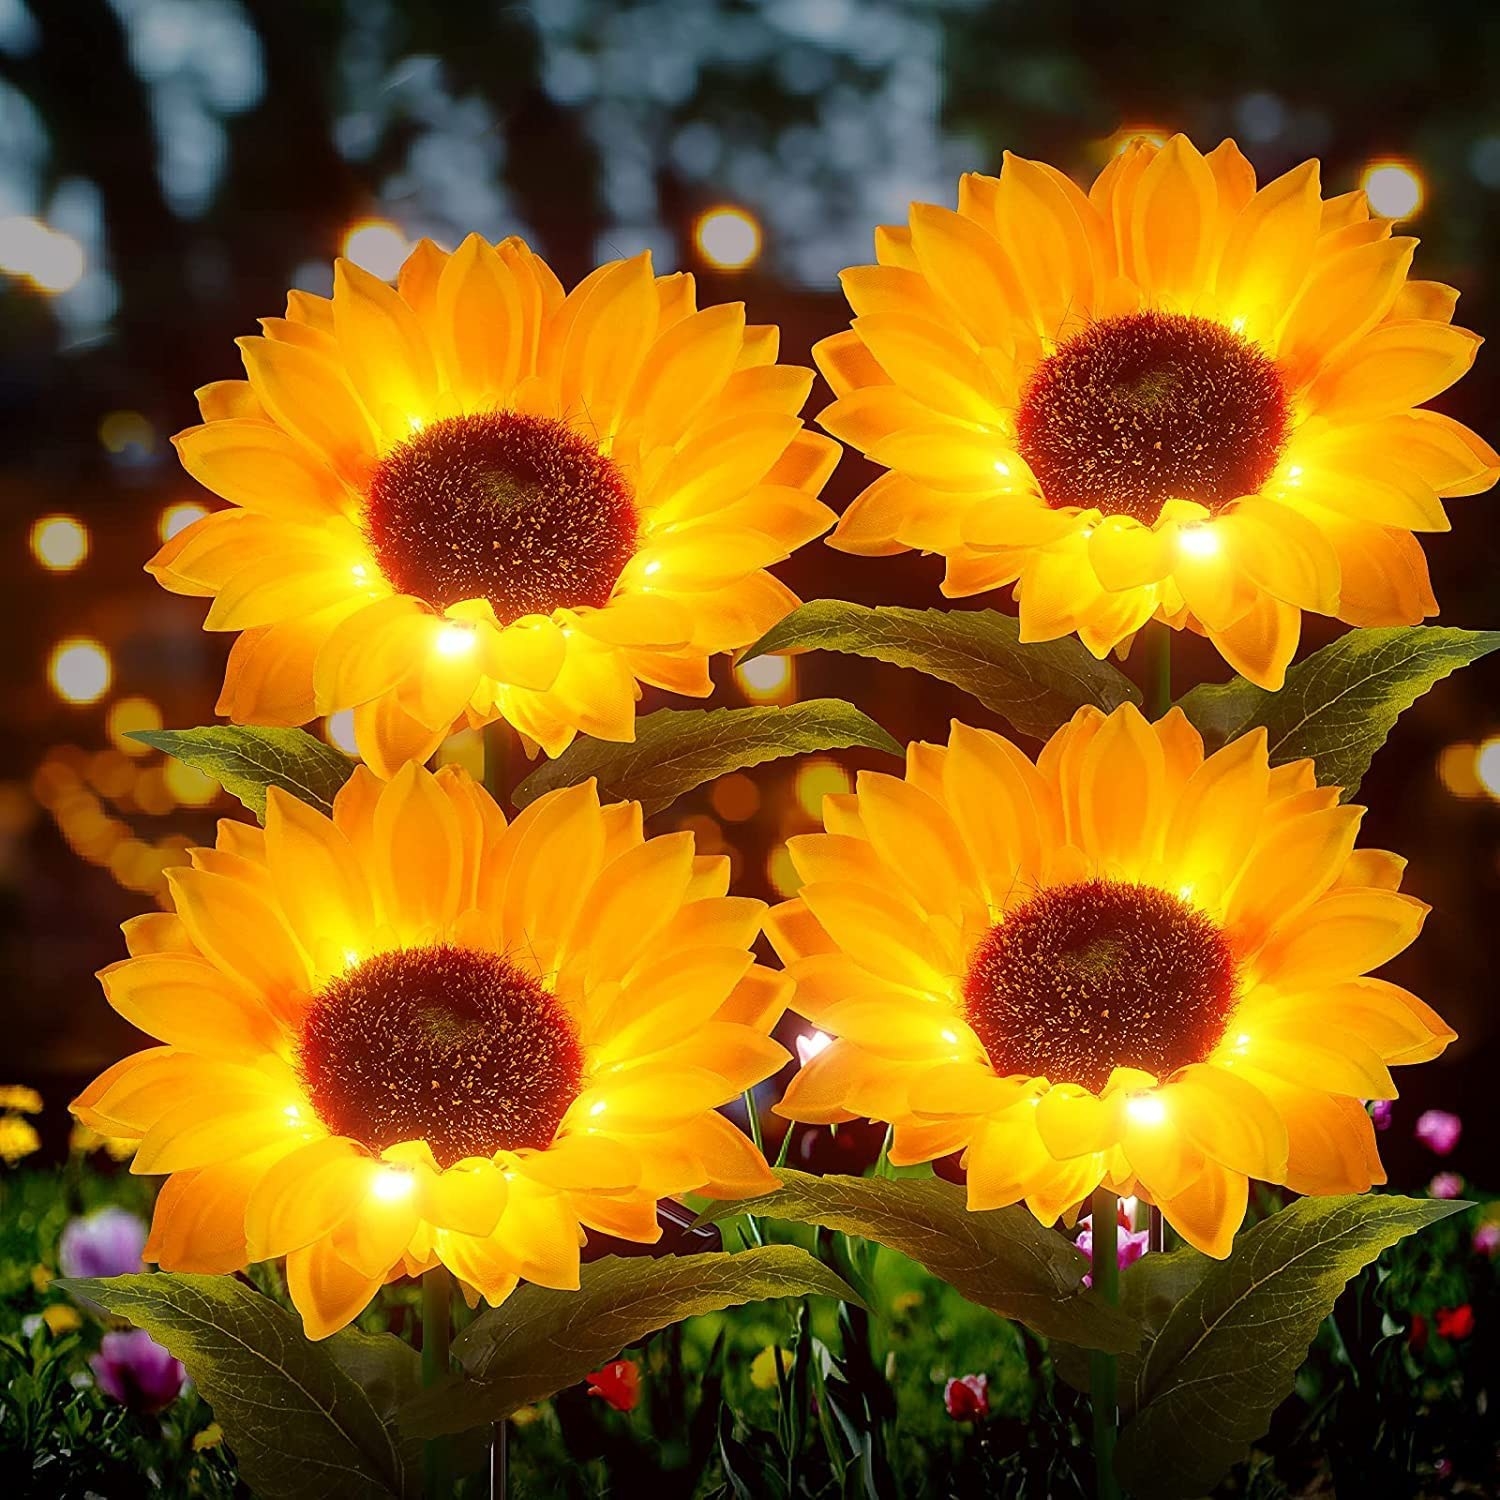 Four solar sunflower lights lit up in a garden at night